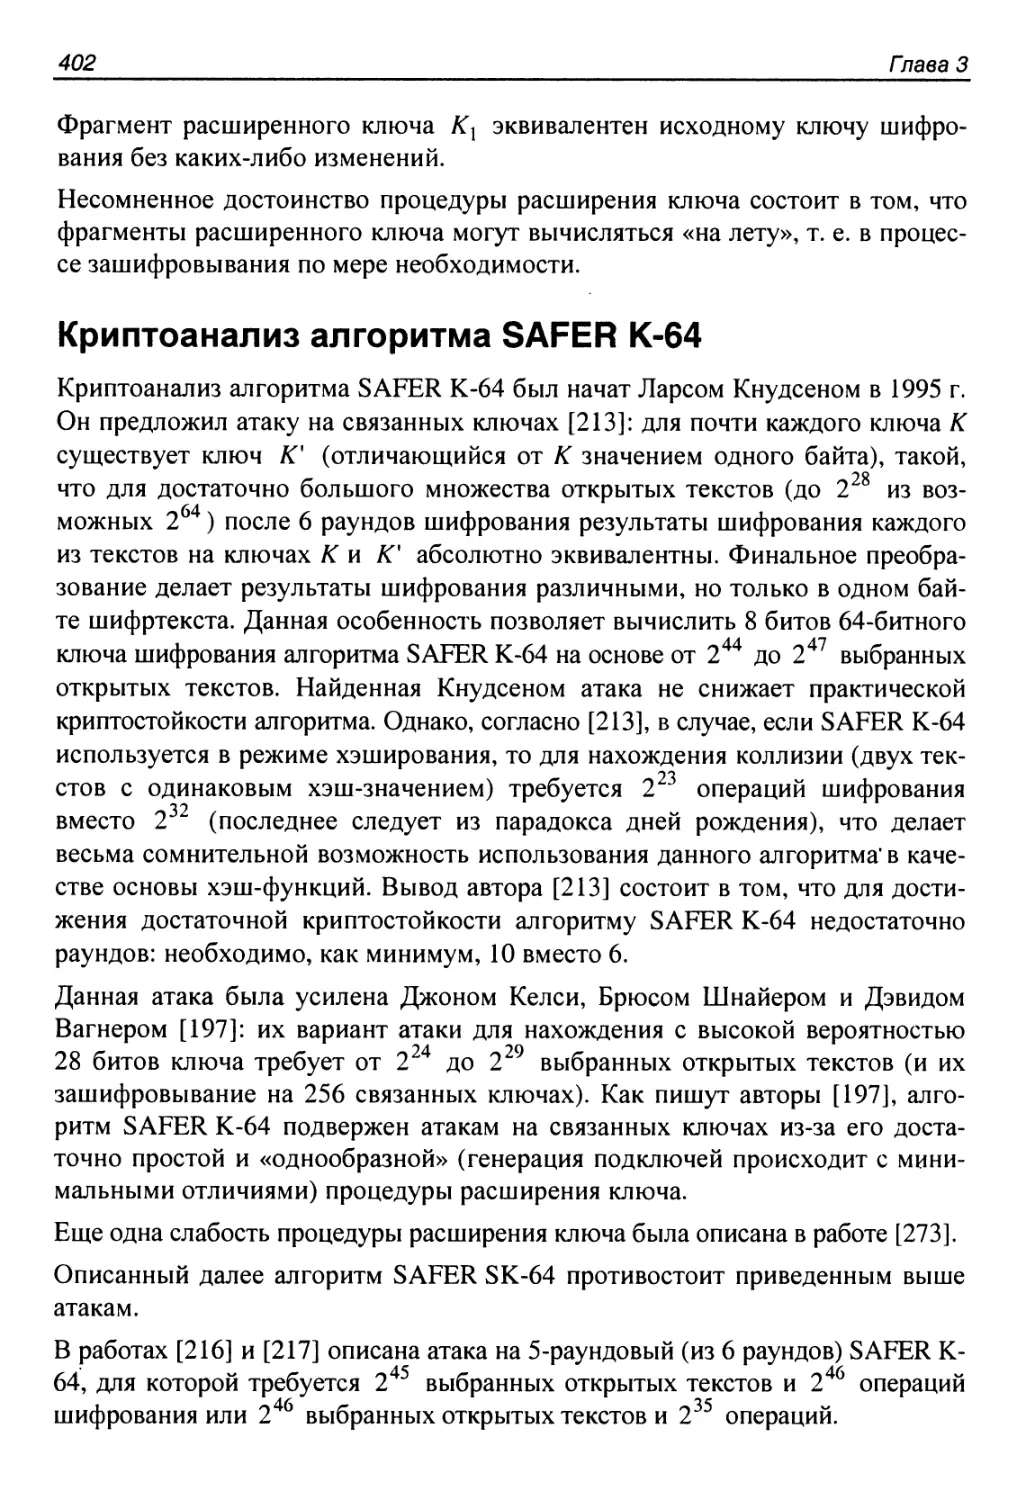 Криптоанализ алгоритма SAFER K-64